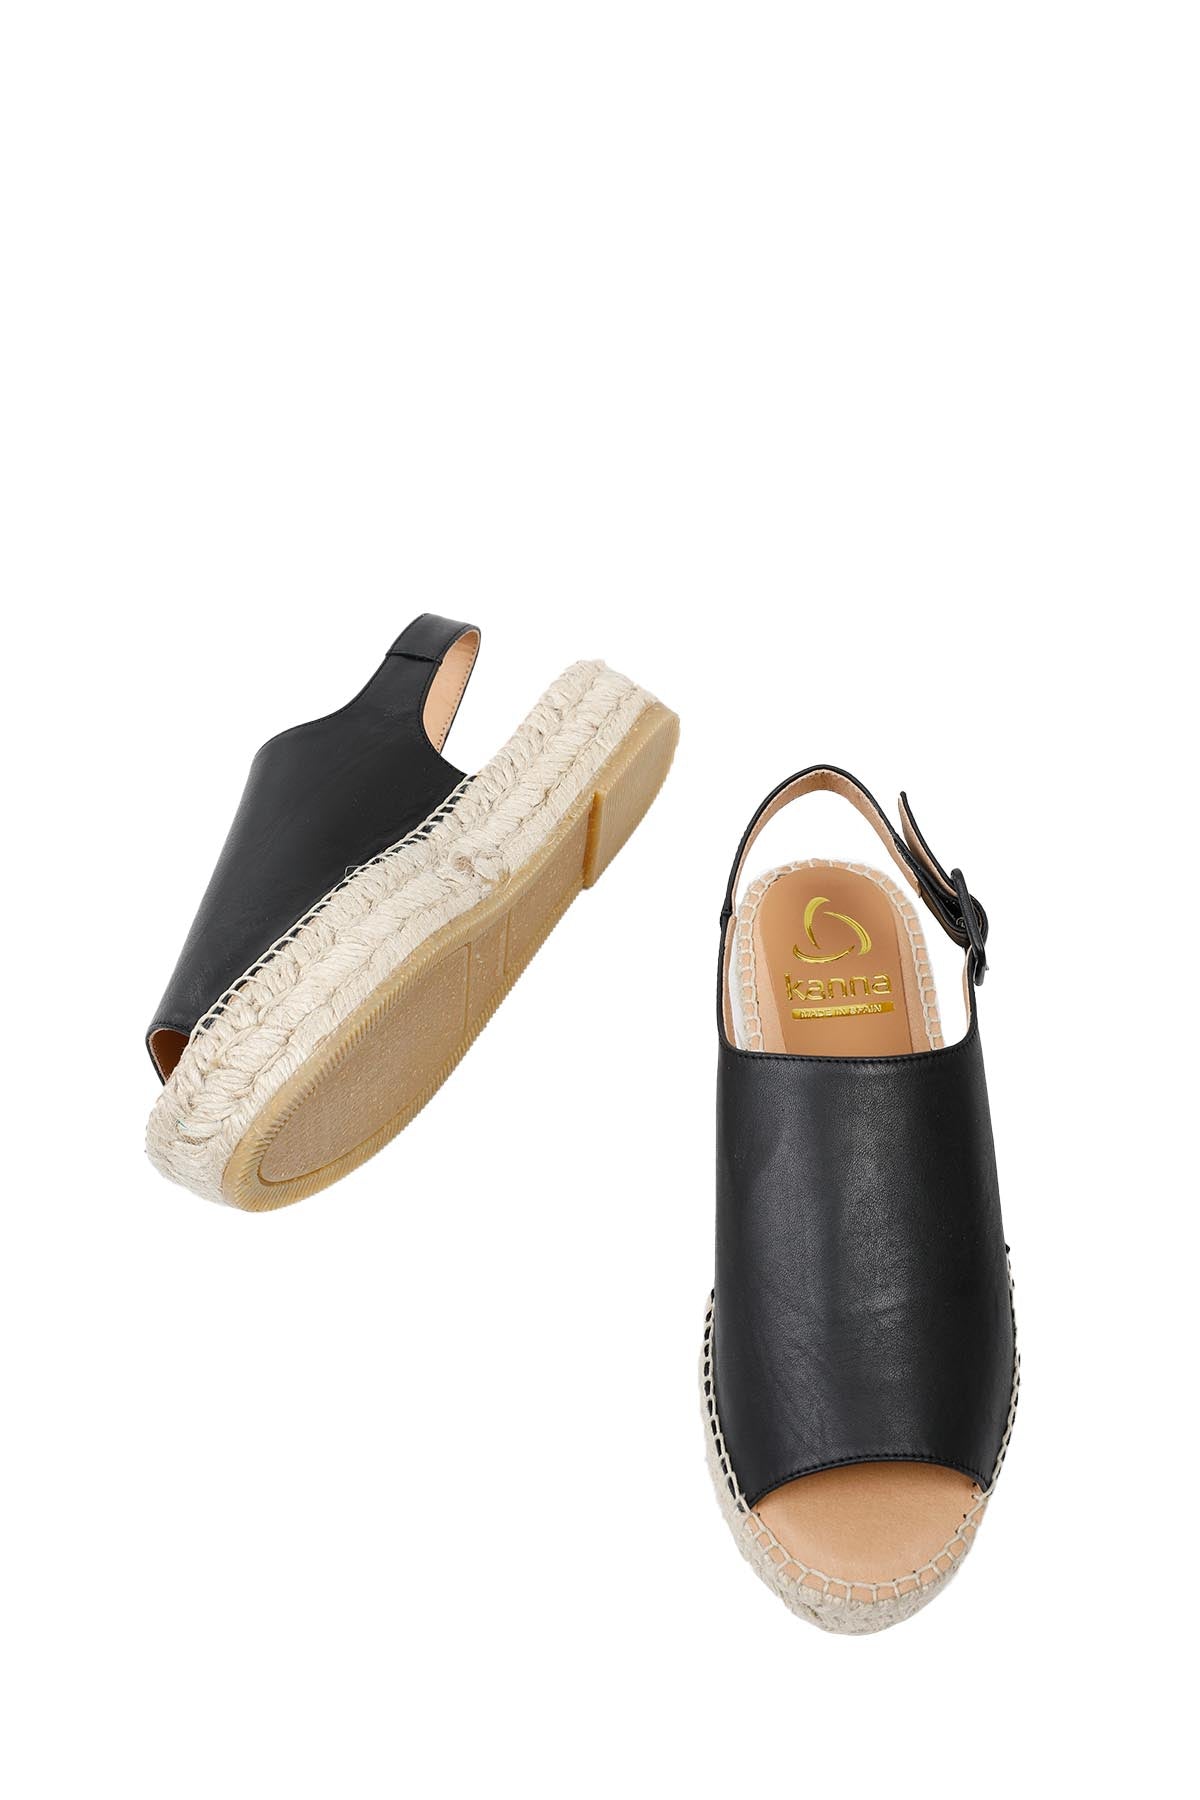 Kanna Deri Sandalet-Libas Trendy Fashion Store